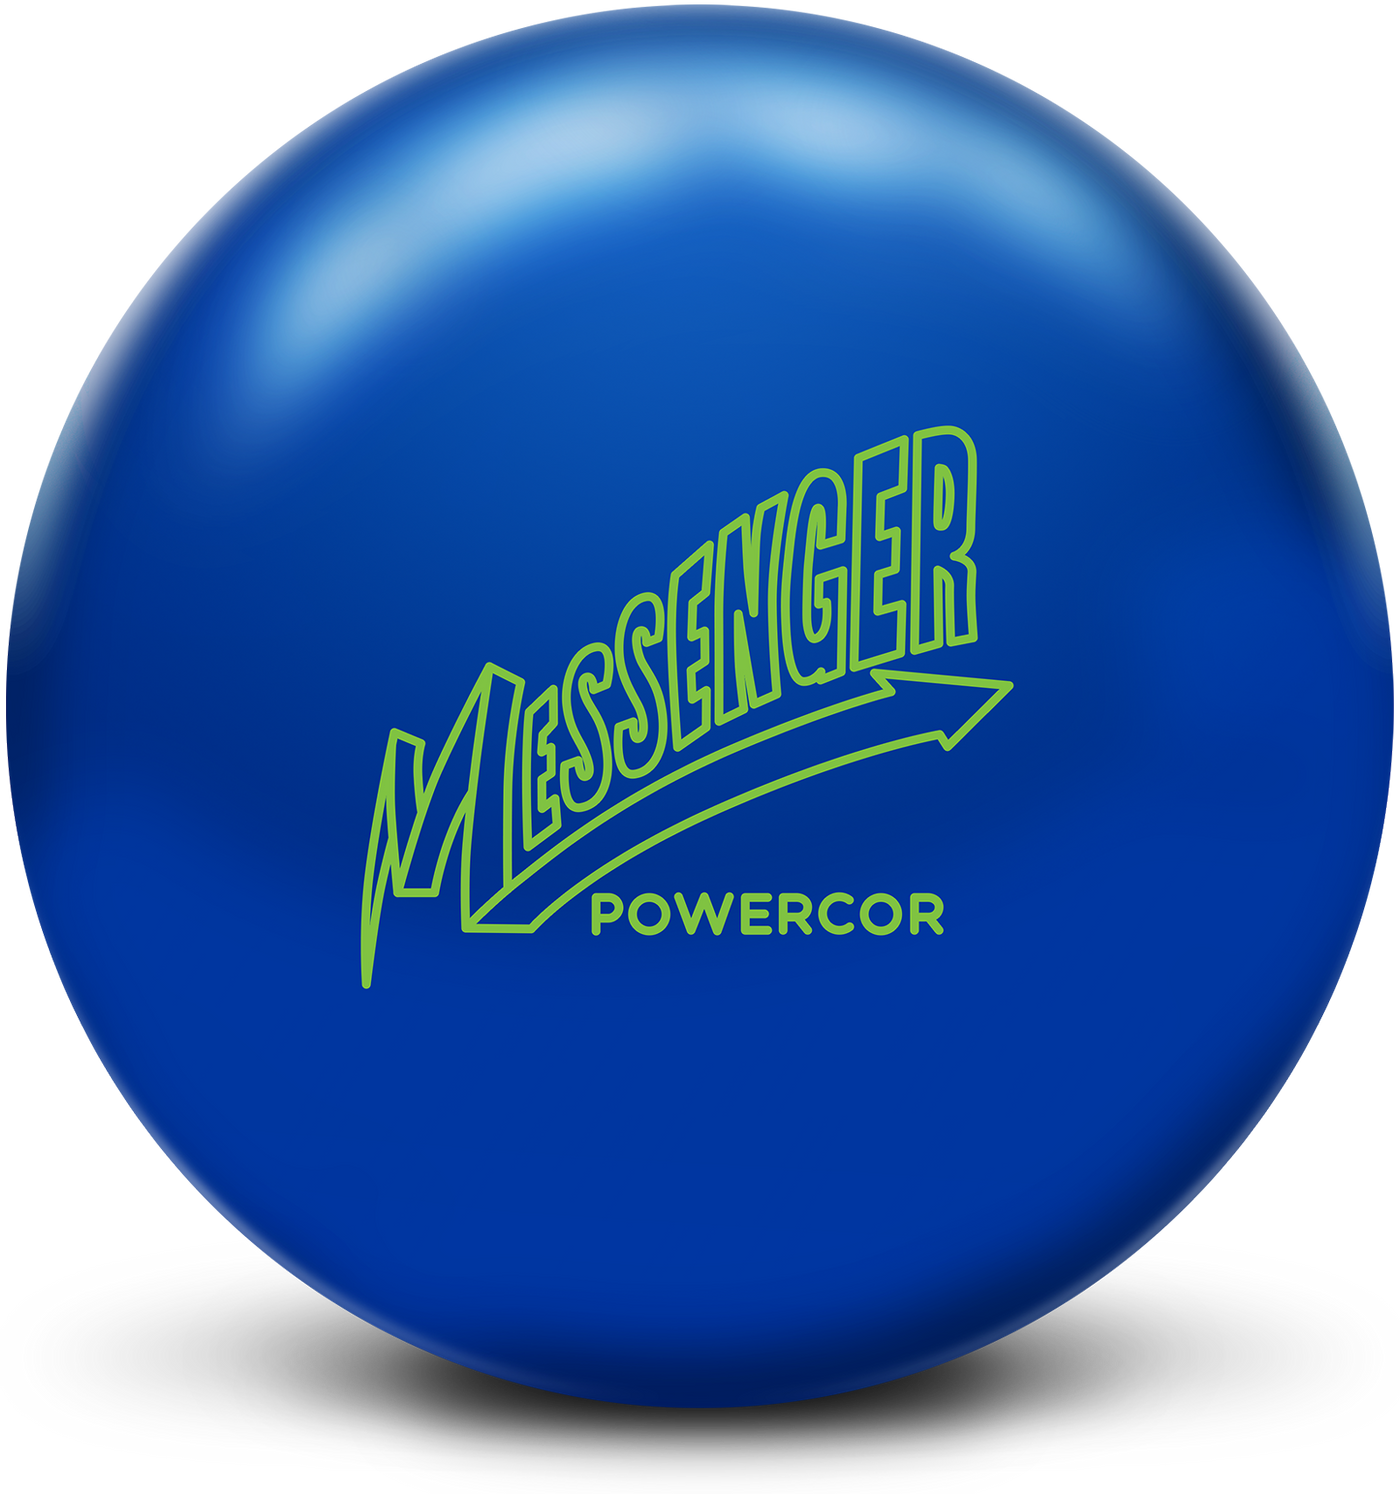 Messenger POWERCOR Solid Bowling Ball